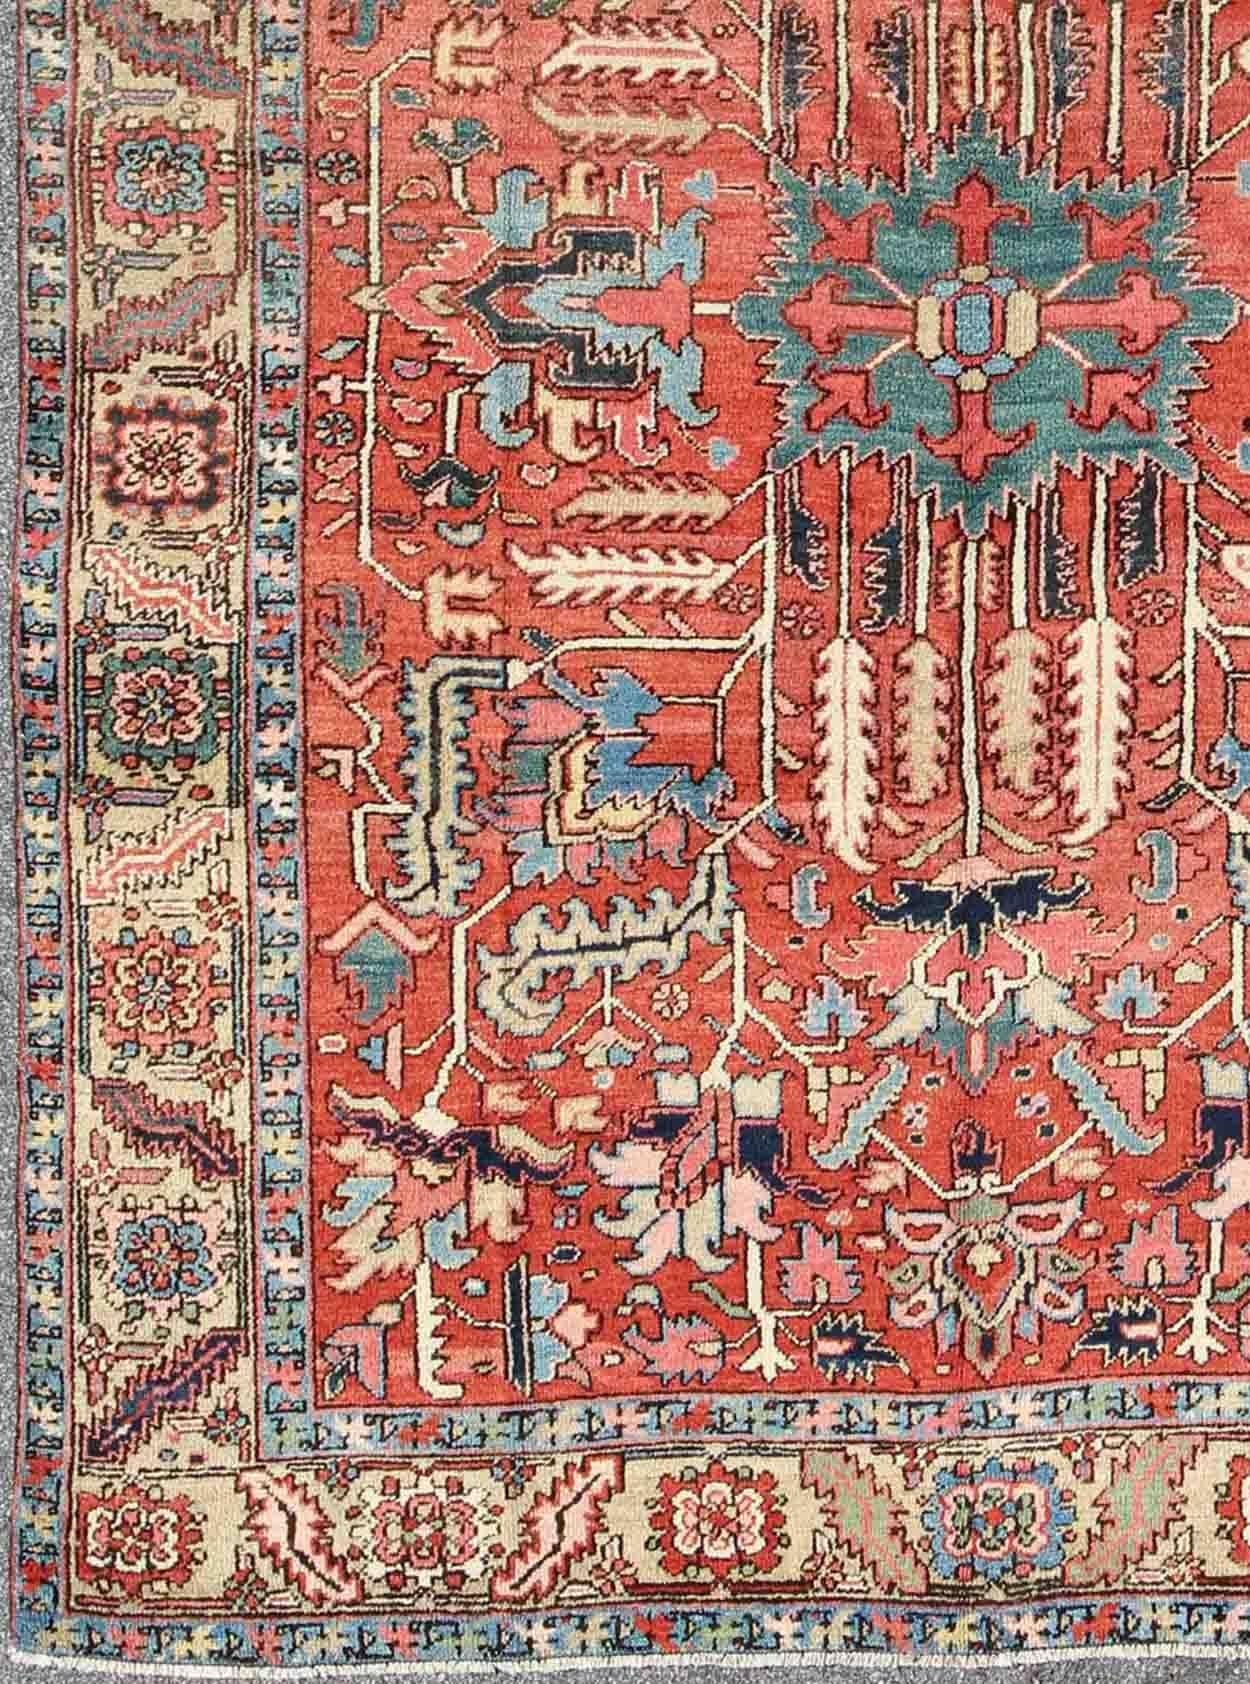  Antique All Over Serapi Goravan Rug with geometric motifs, Keivan Woven Arts/rug/ M14-0806, country of origin / type: Iran / Serapi, Goravan, Heriz, circa 1900

Measures: 8'8 x 12'0

This magnificent antique Persian Heriz-Serapi carpet from the